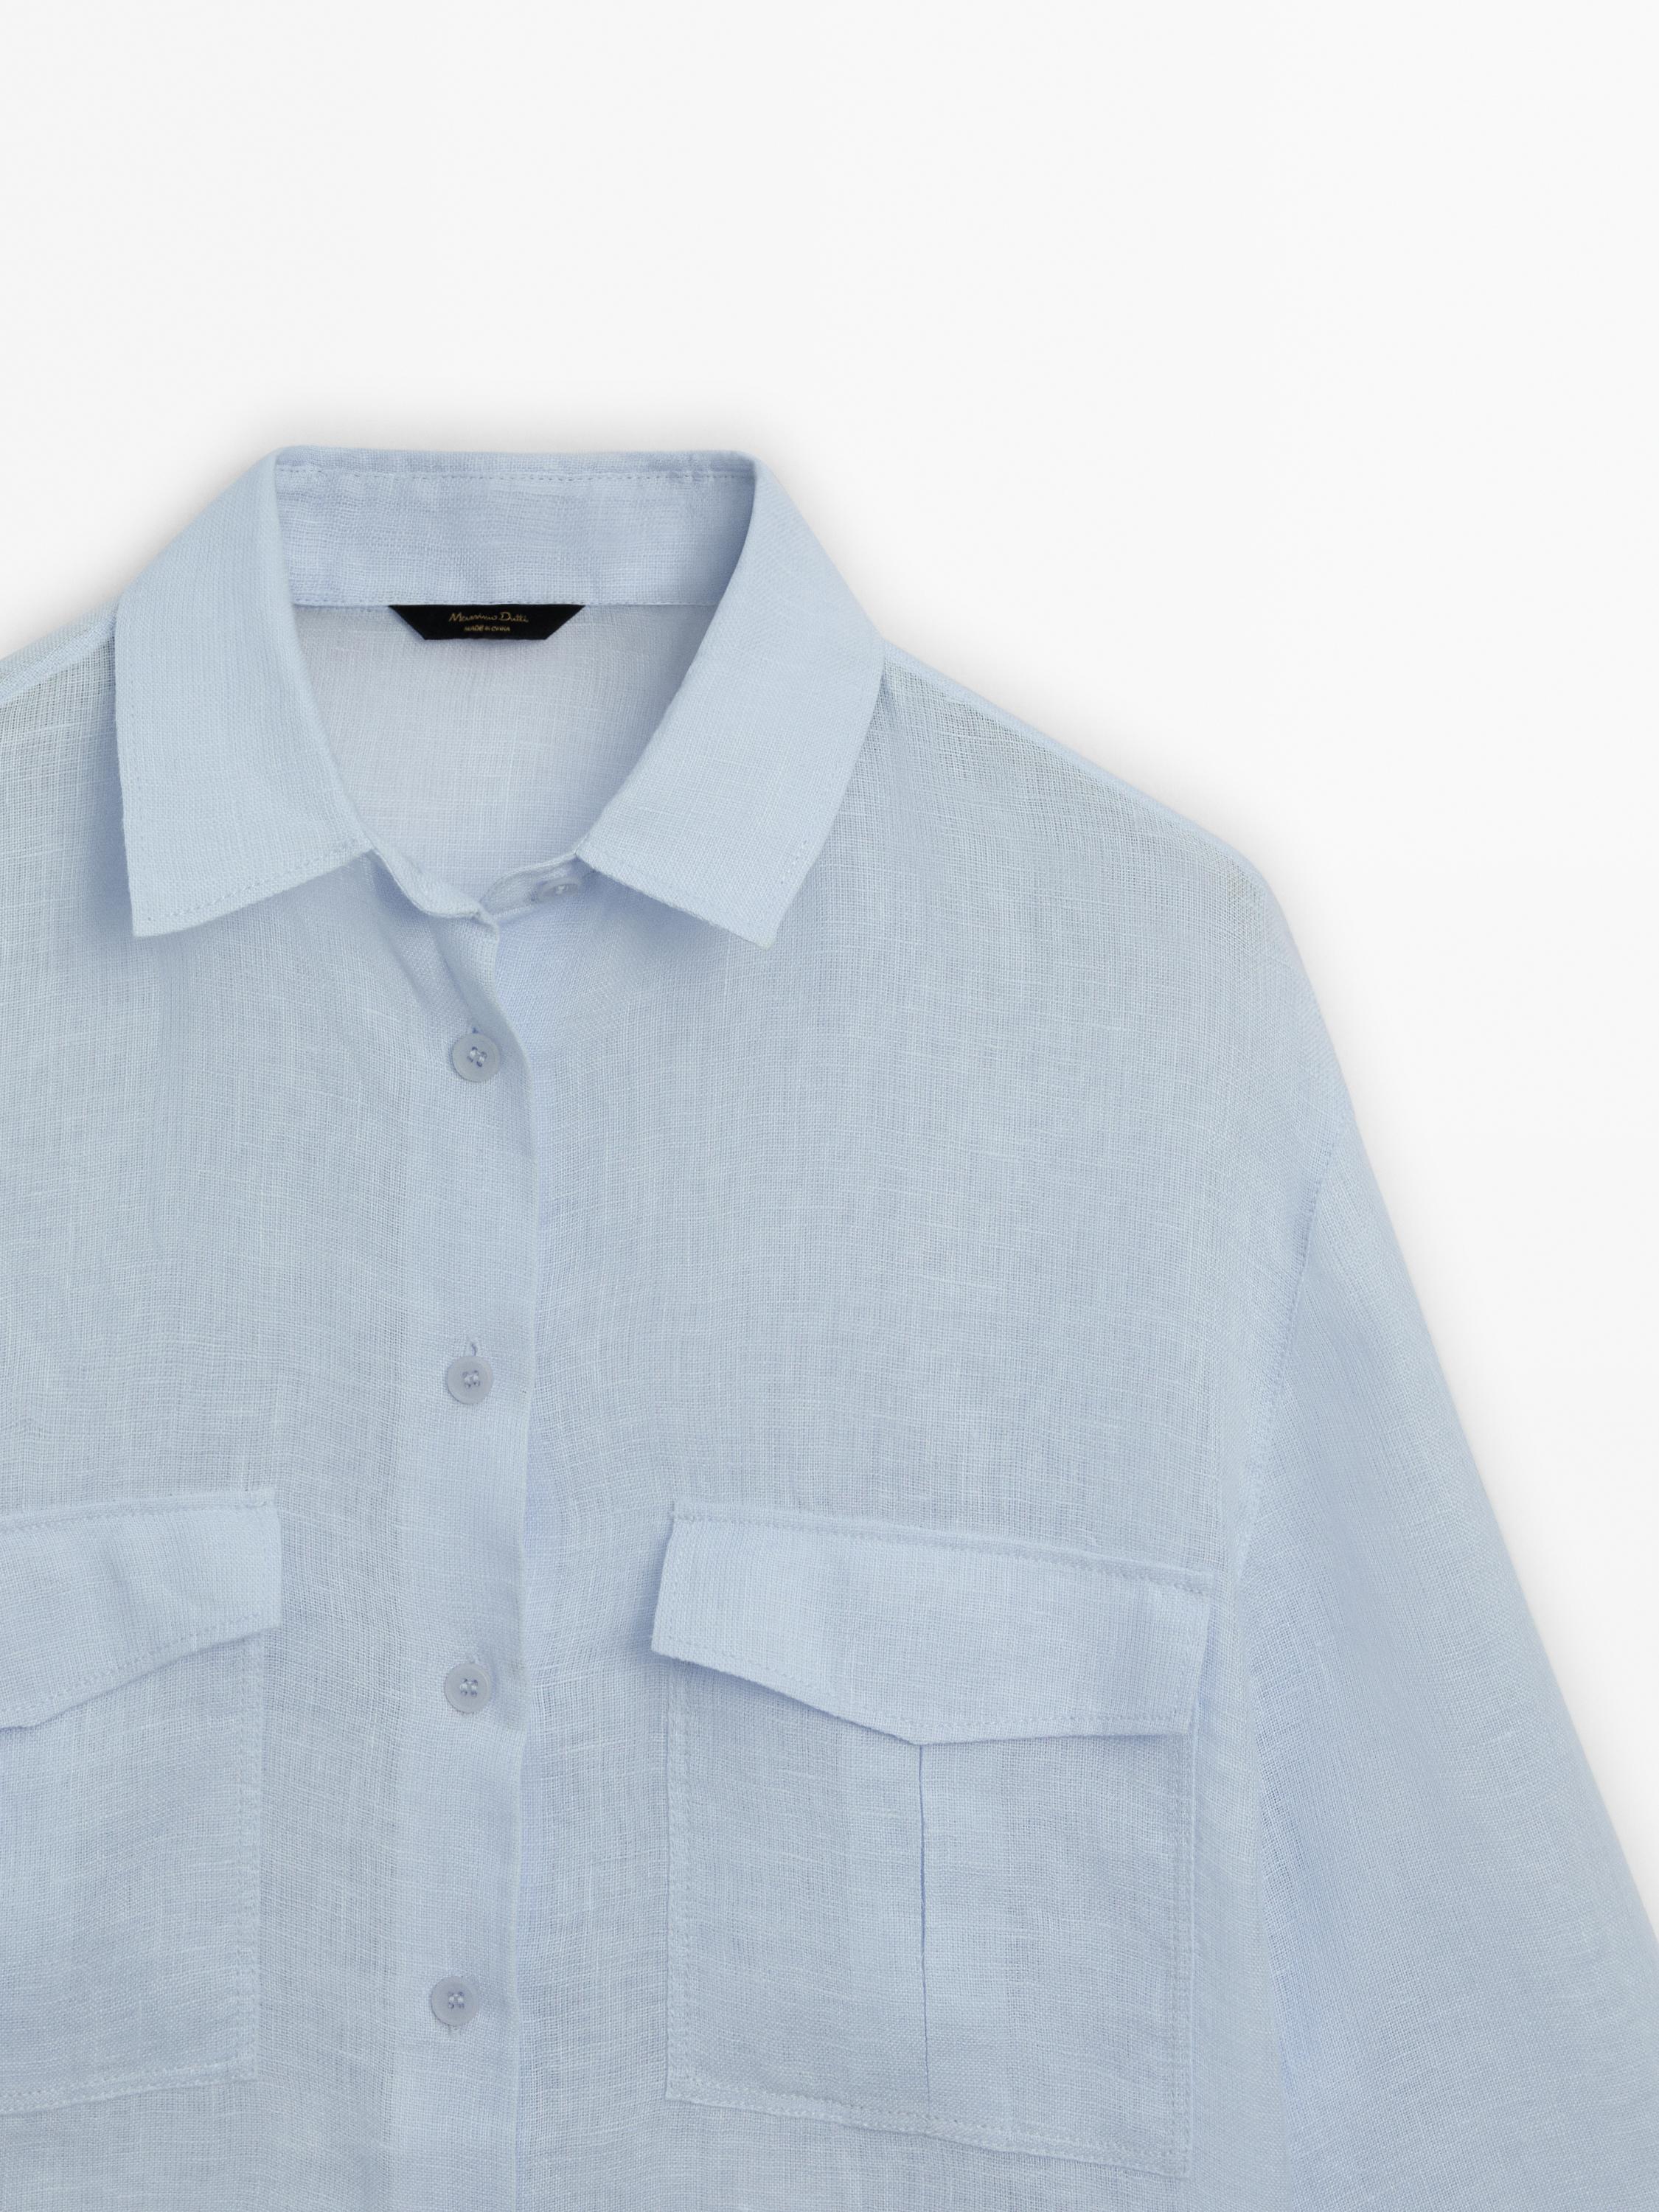 100% linen shirt with pockets - Sky blue | ZARA United States